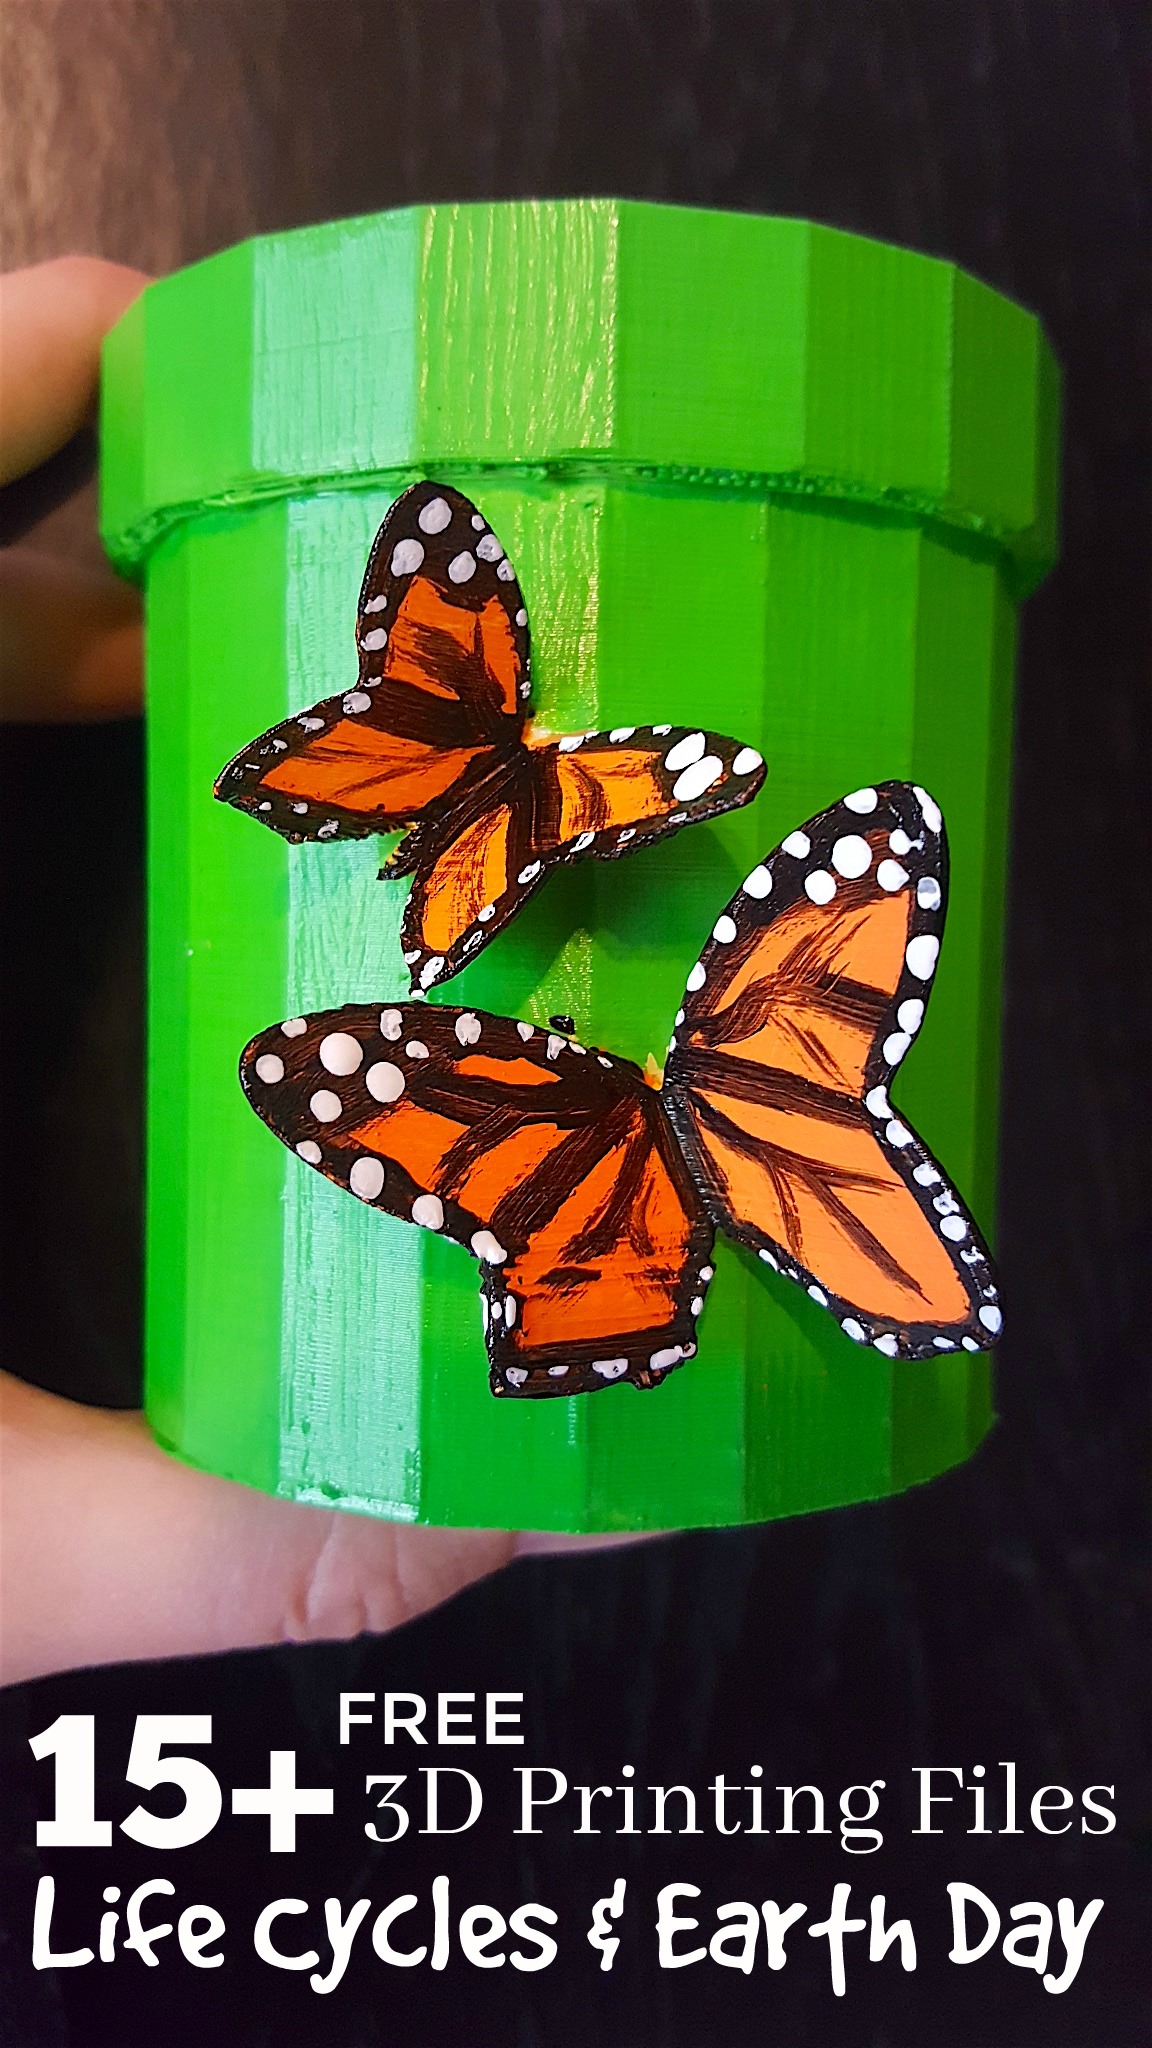 Monarch Butterfly 3D model 3D printable